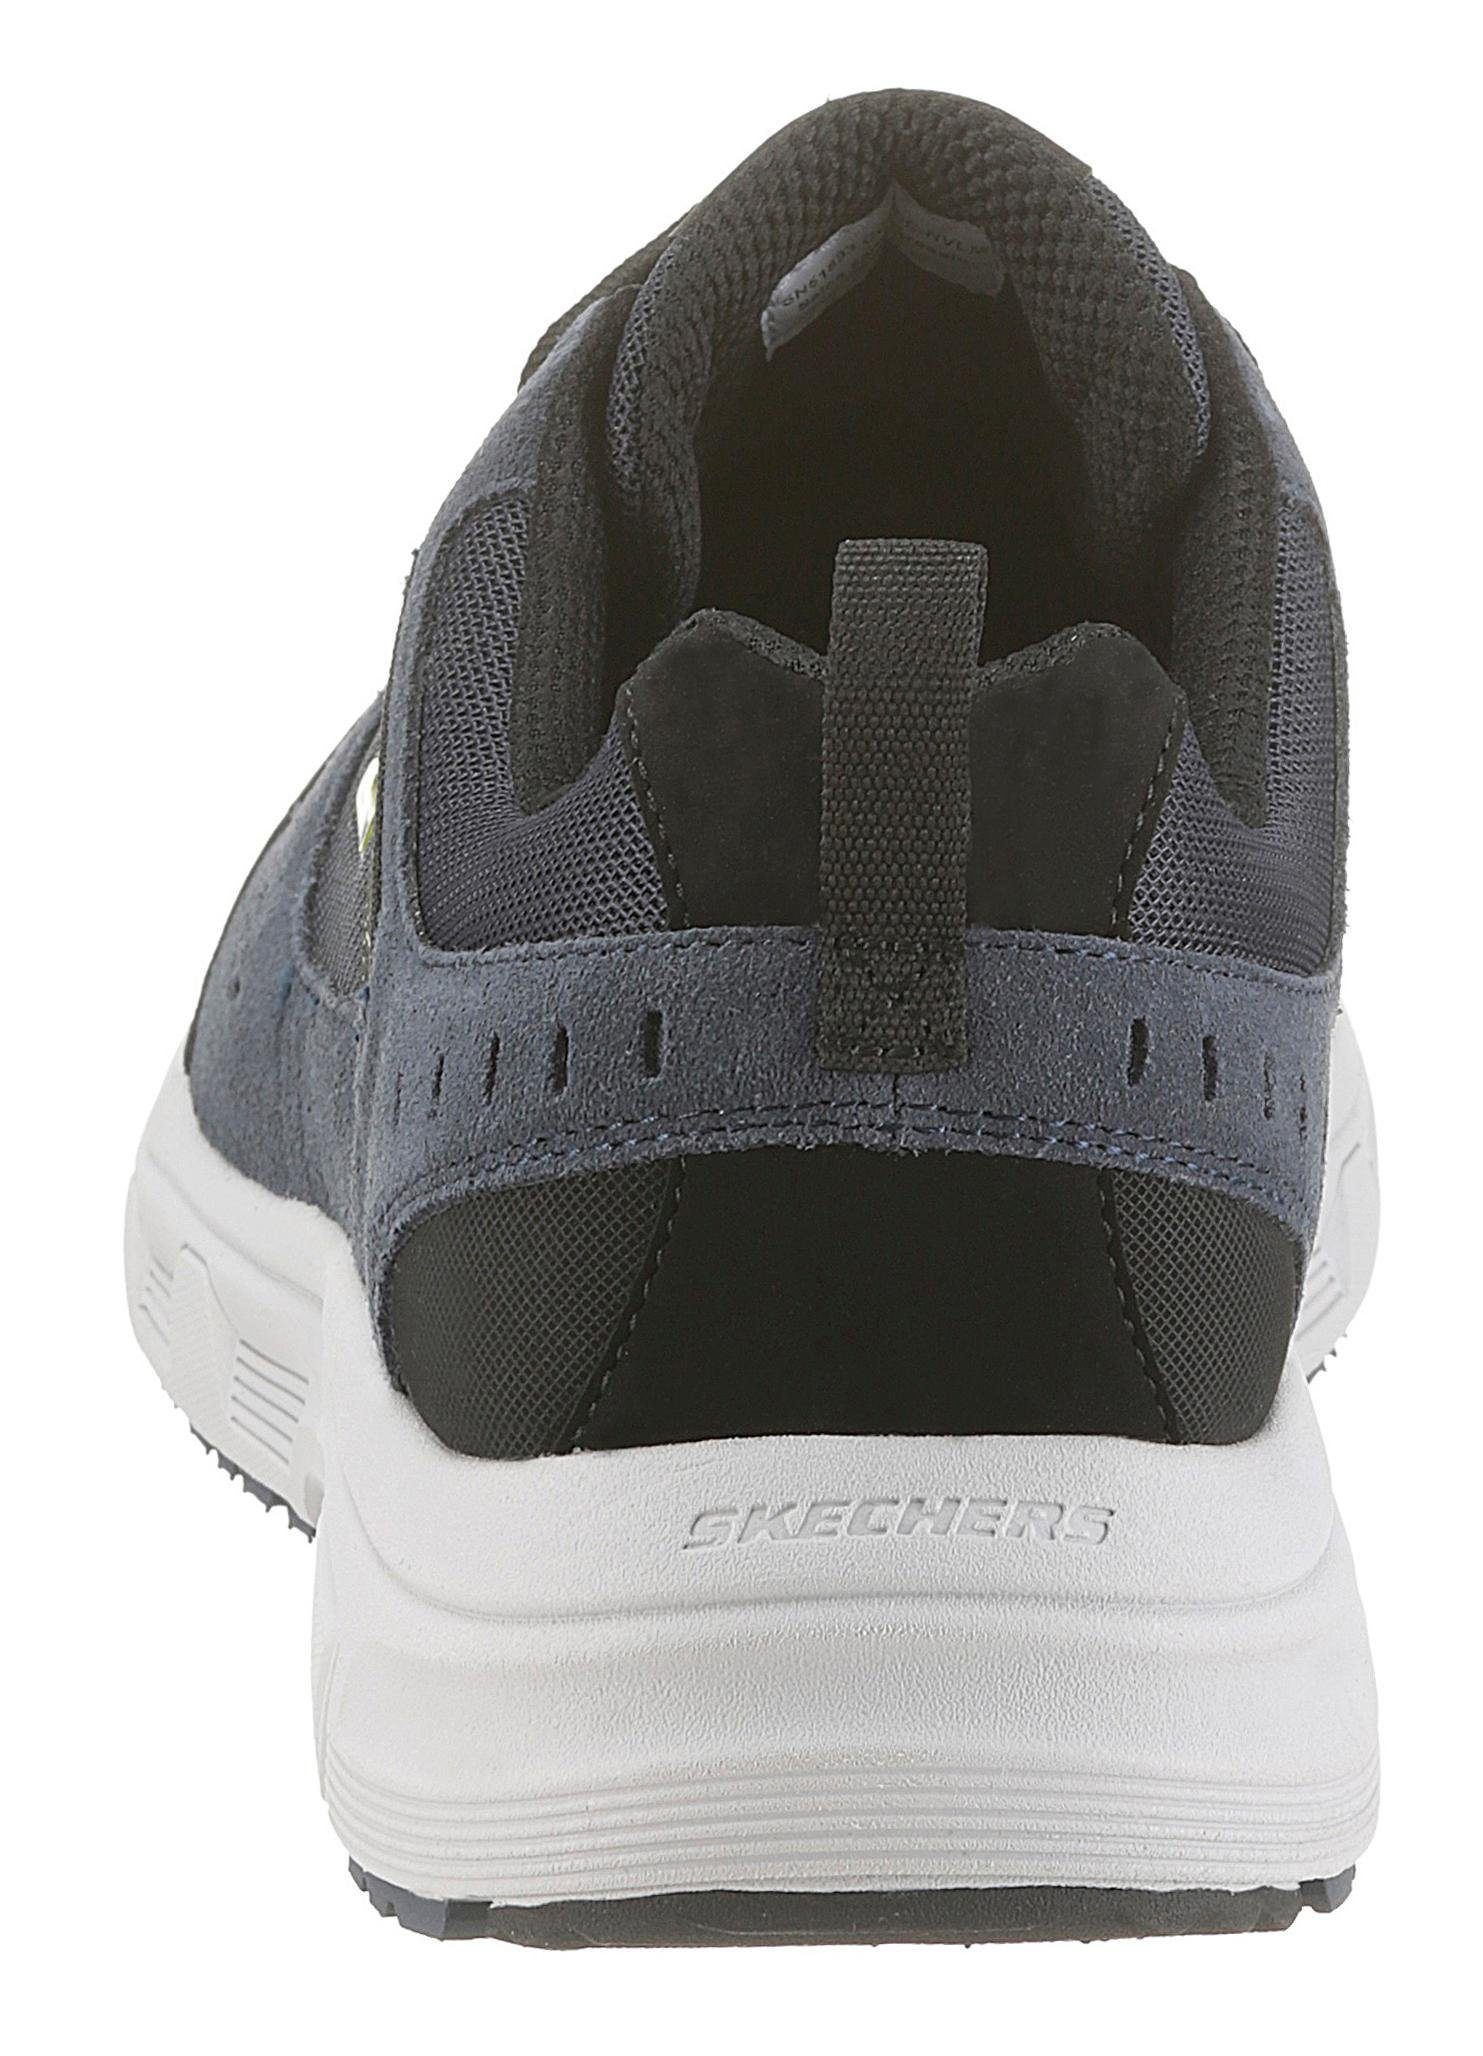 Skechers Oak Canyon Sneaker mit navy Memory Foam-Ausstattung schwarz bequemer